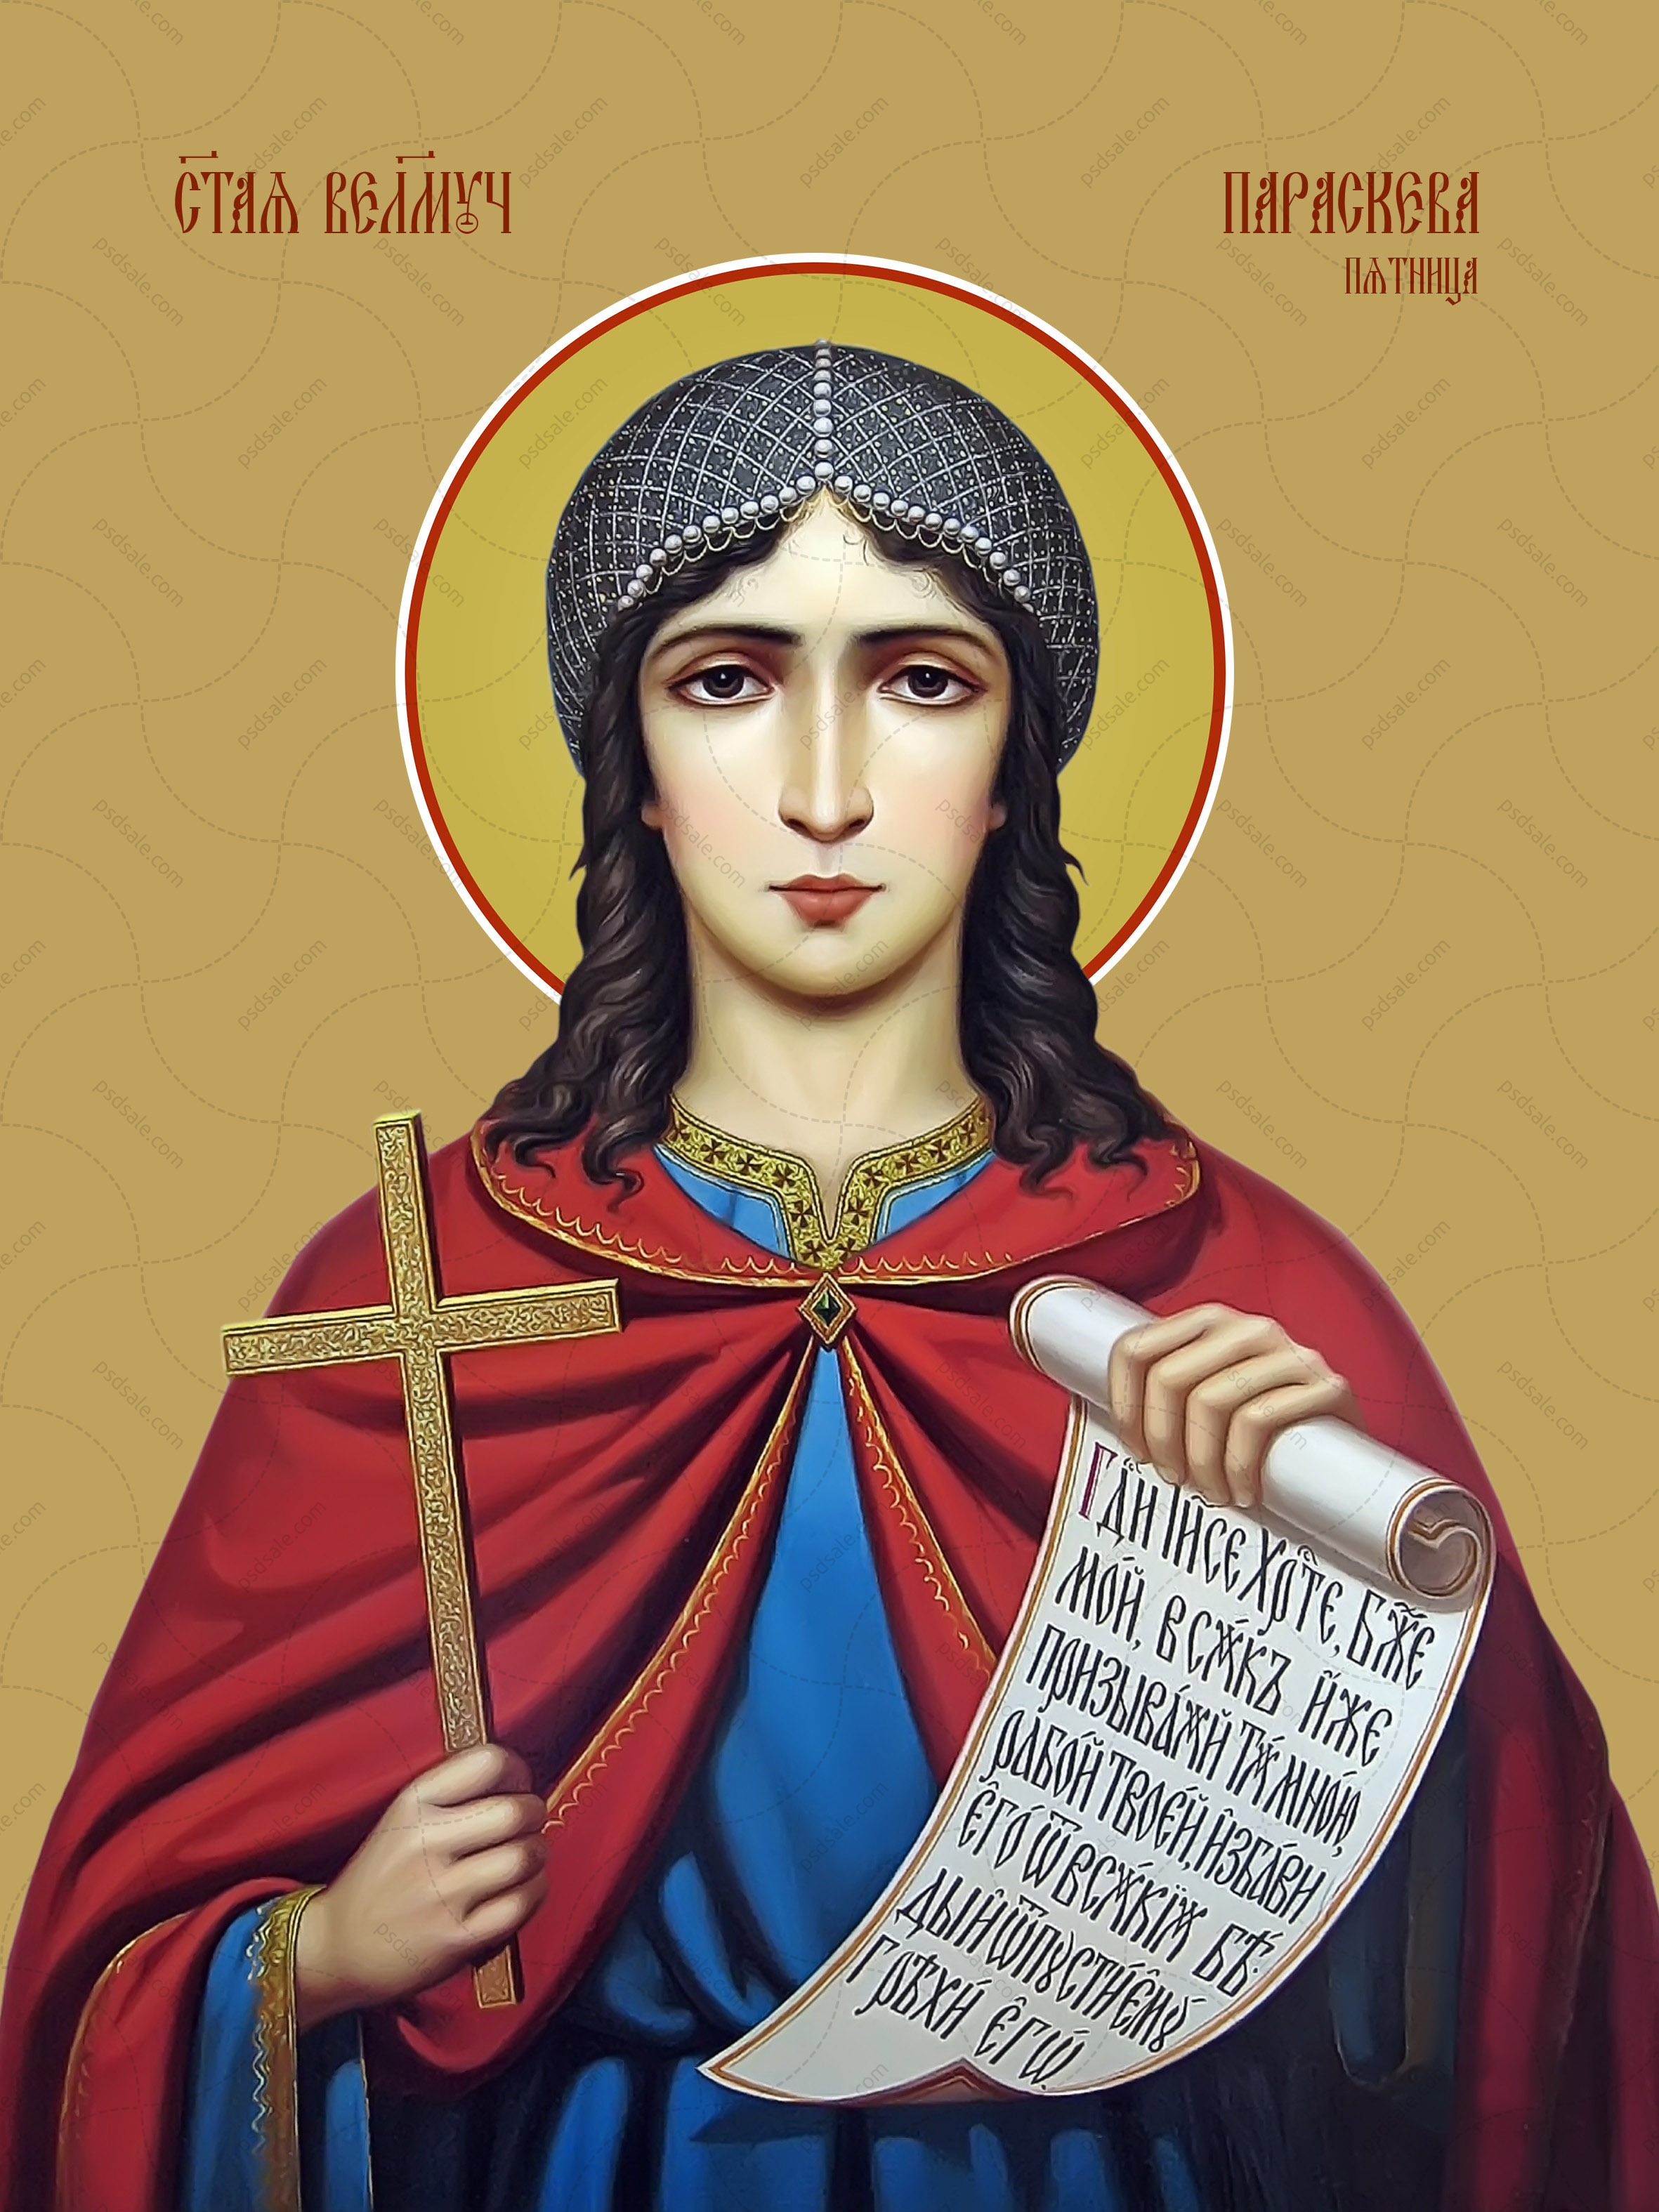 Paraskeva Friday, Holy Great Martyr